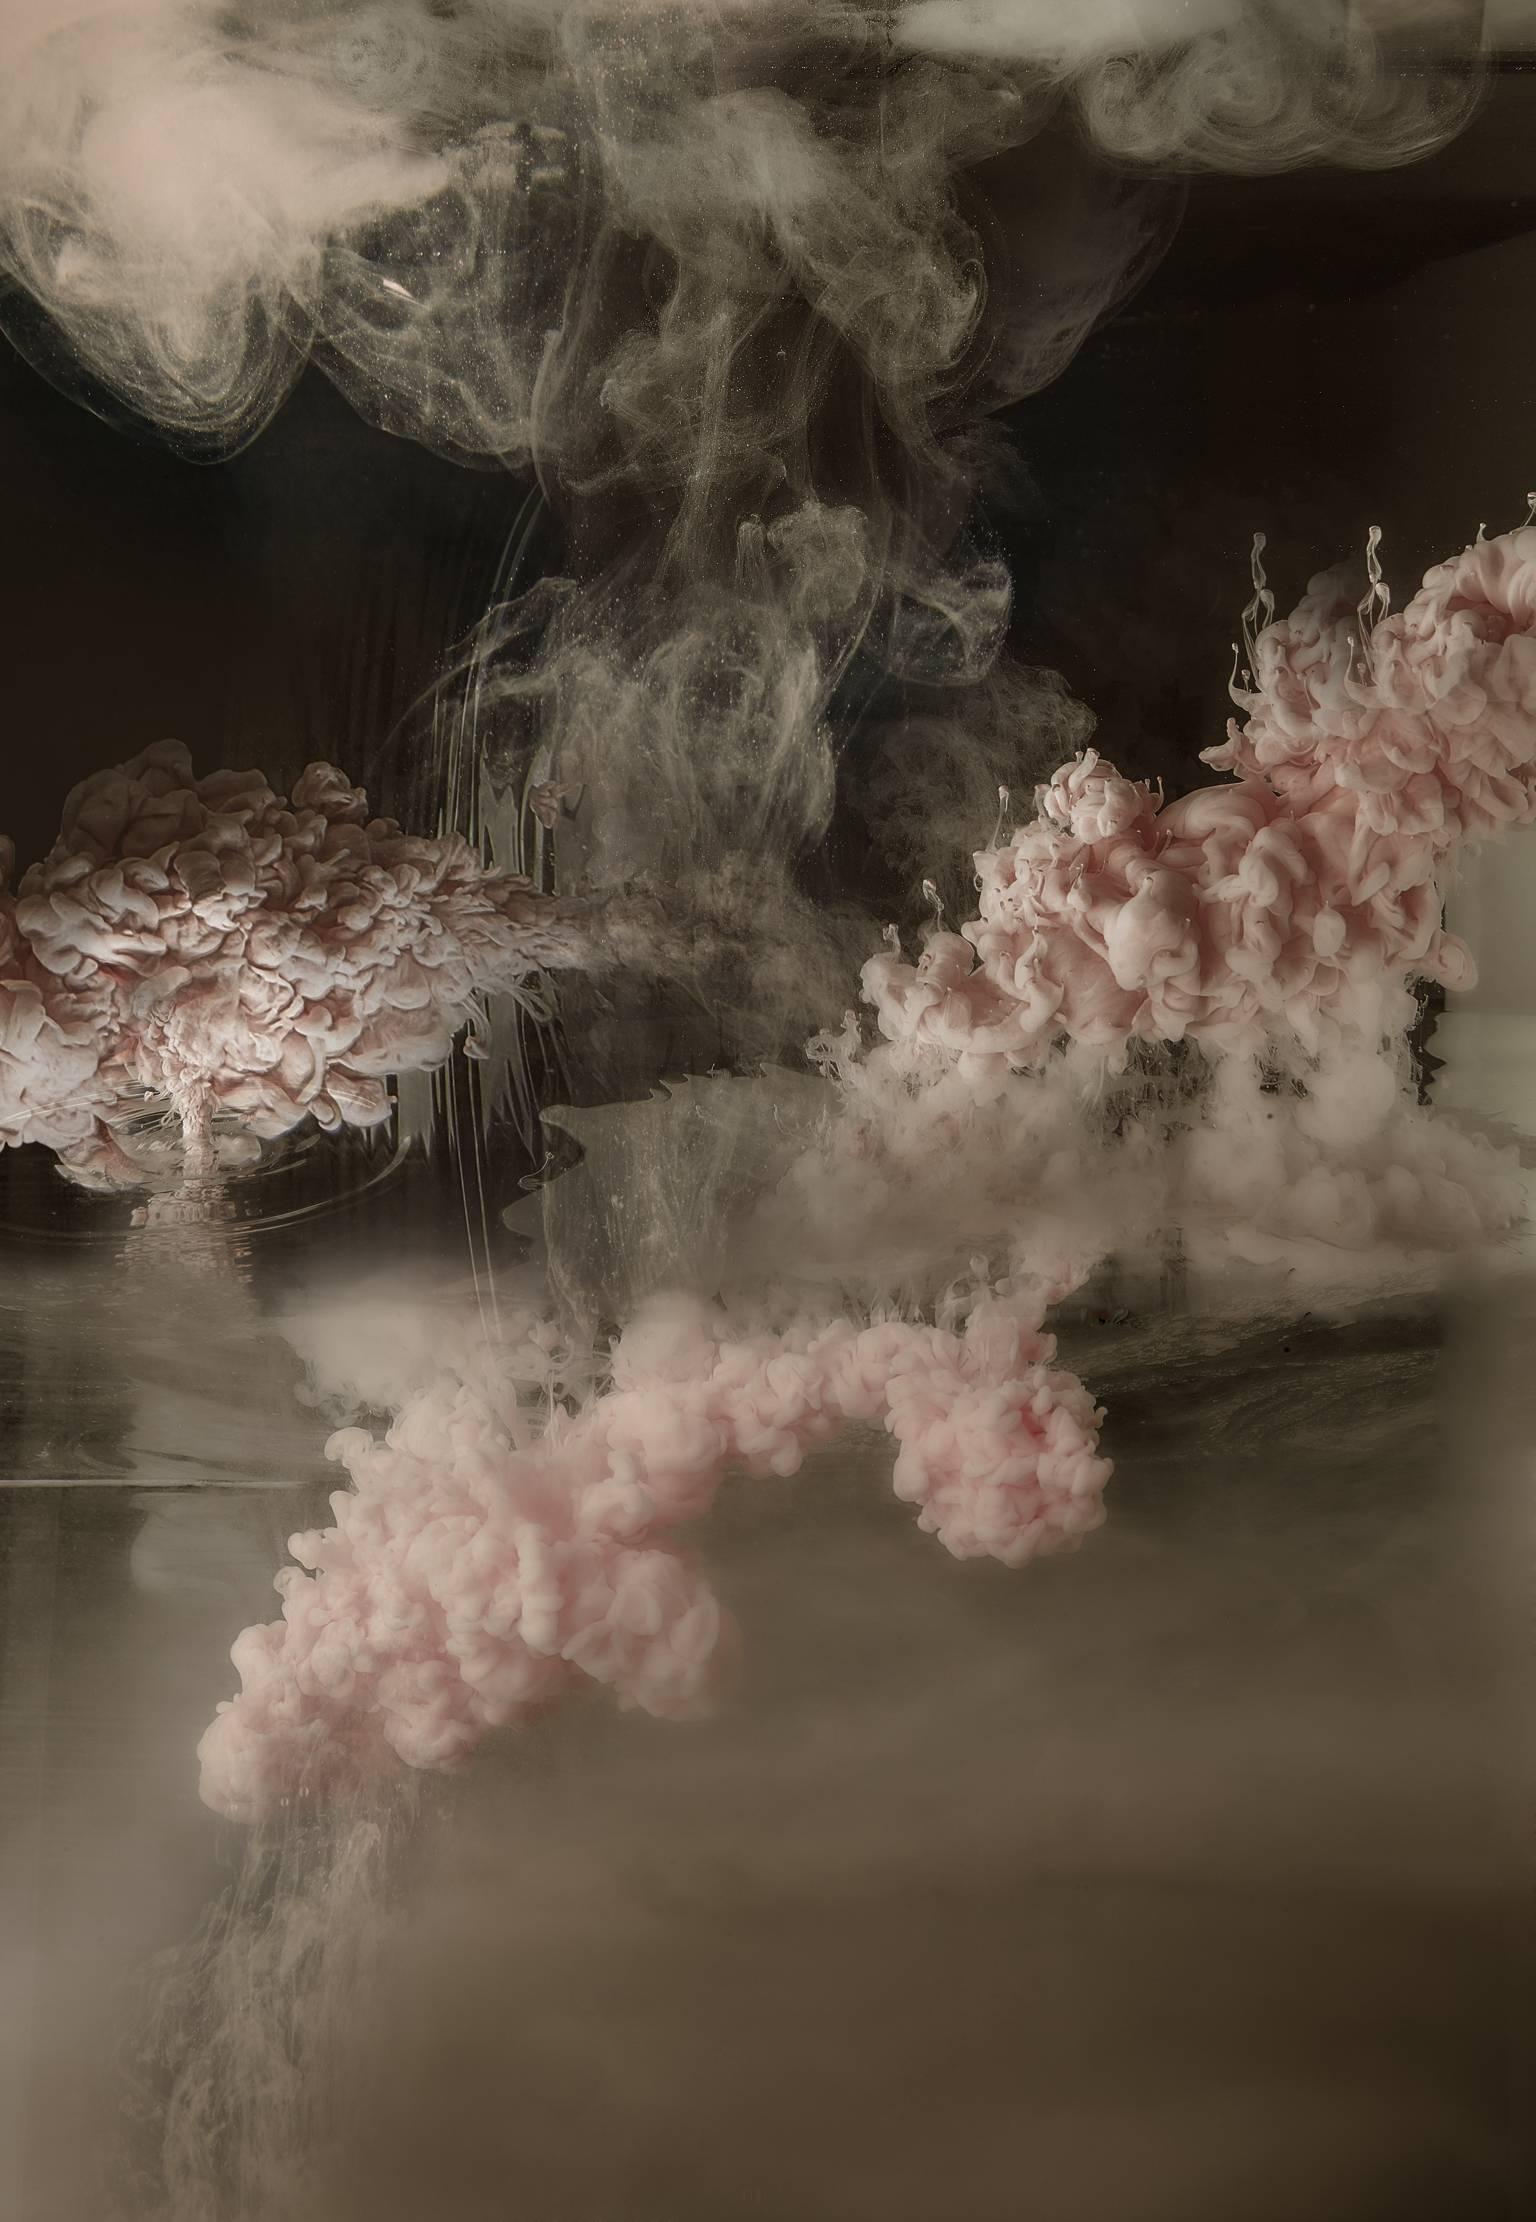 Christian Stoll Color Photograph – Stratosphäre I  - Großformatige Fotografie abstrakter flüssiger Wasserwolkenlandschaften